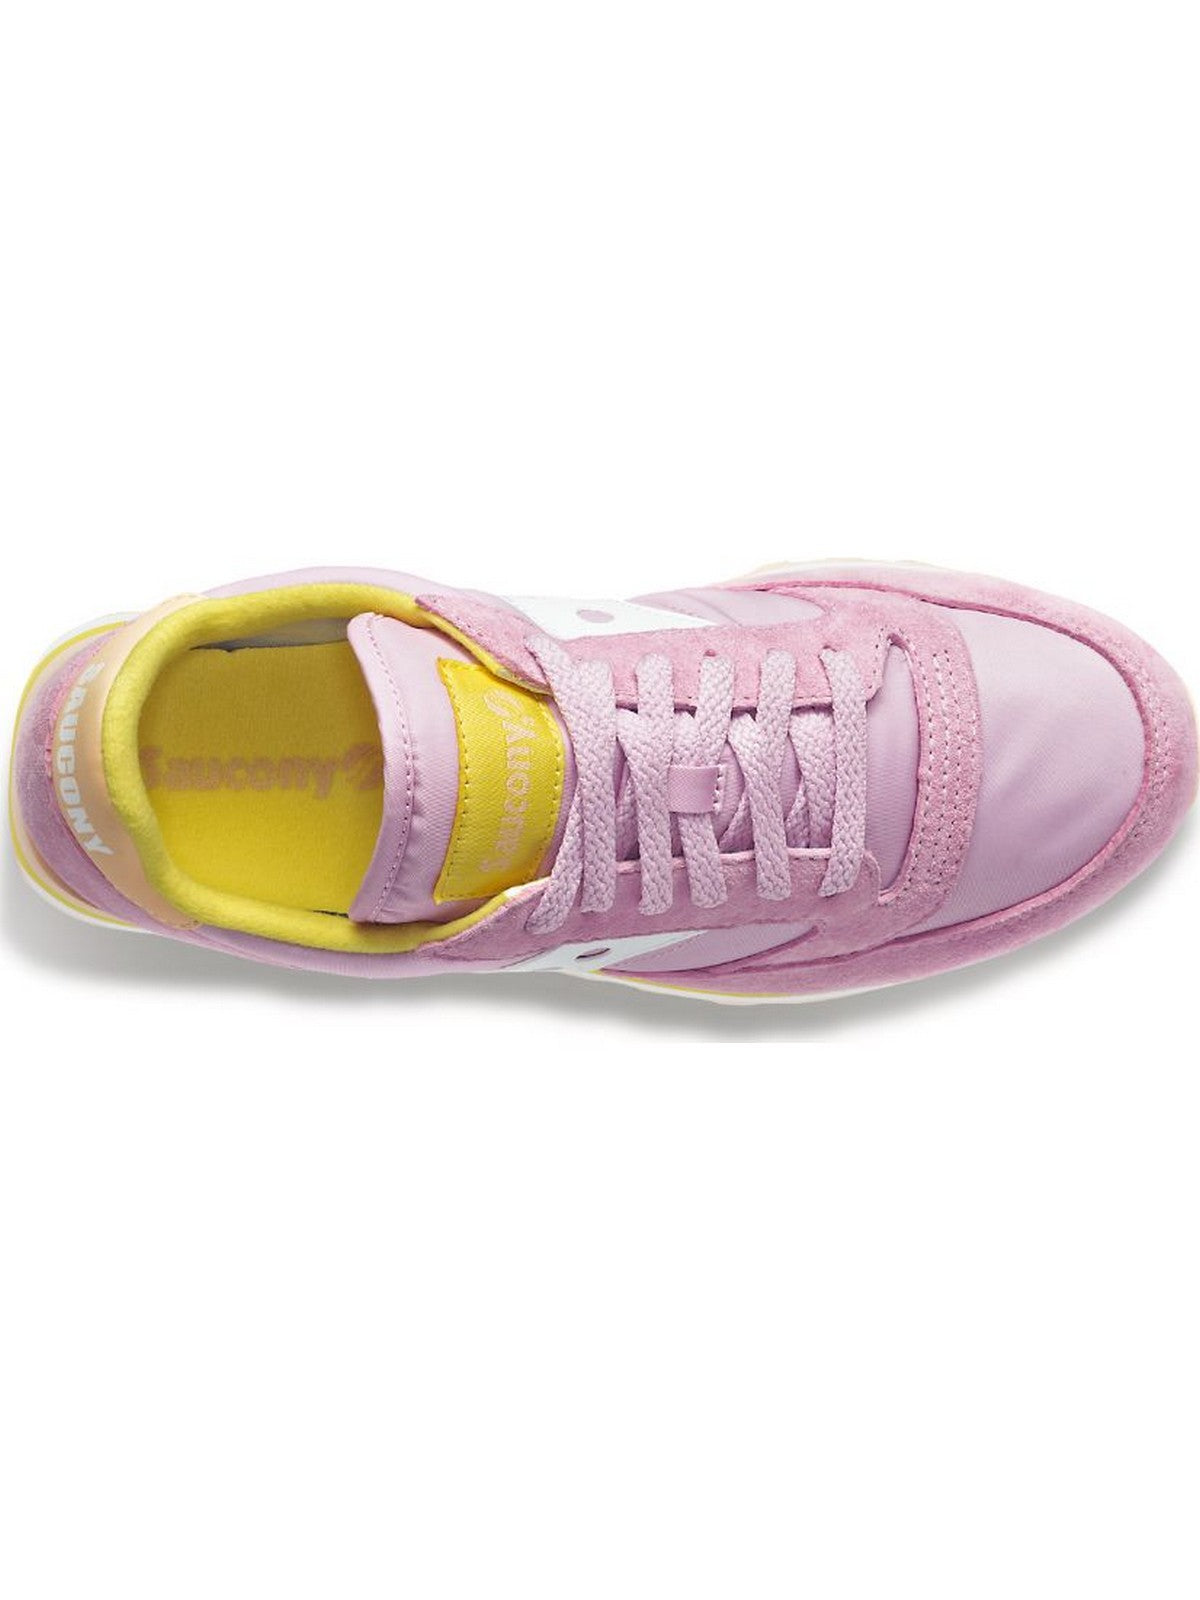 SAUCONY Sneaker Donna Jazz triple S60530-18 Rosa